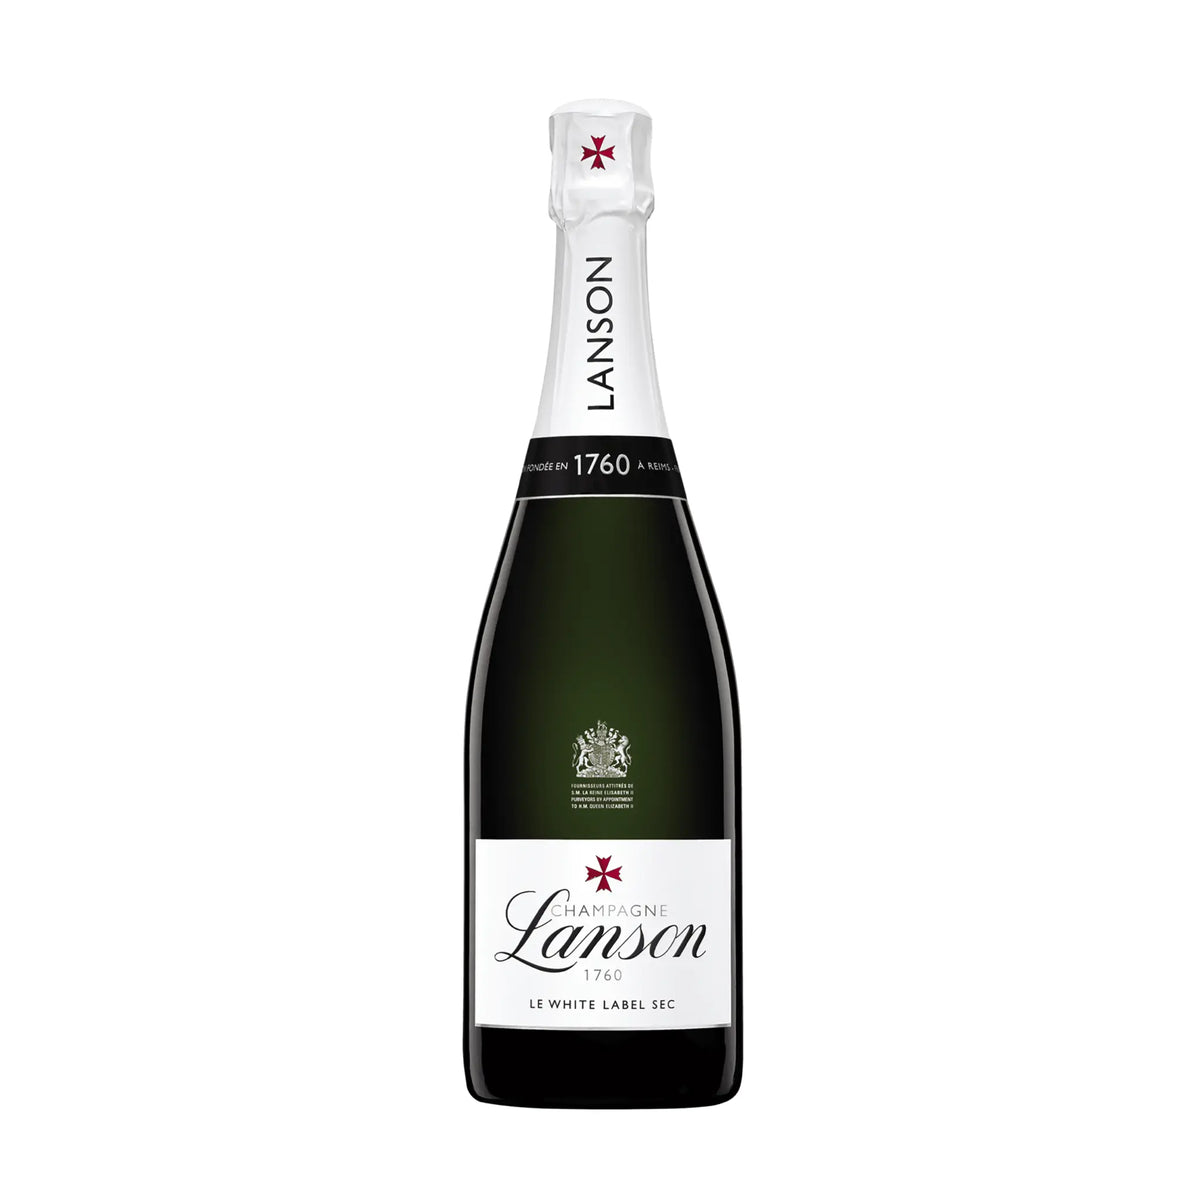 Champagne Lanson-Schaumwein-Champagner-Champagne-Frankreich-Le White Label sec-WINECOM